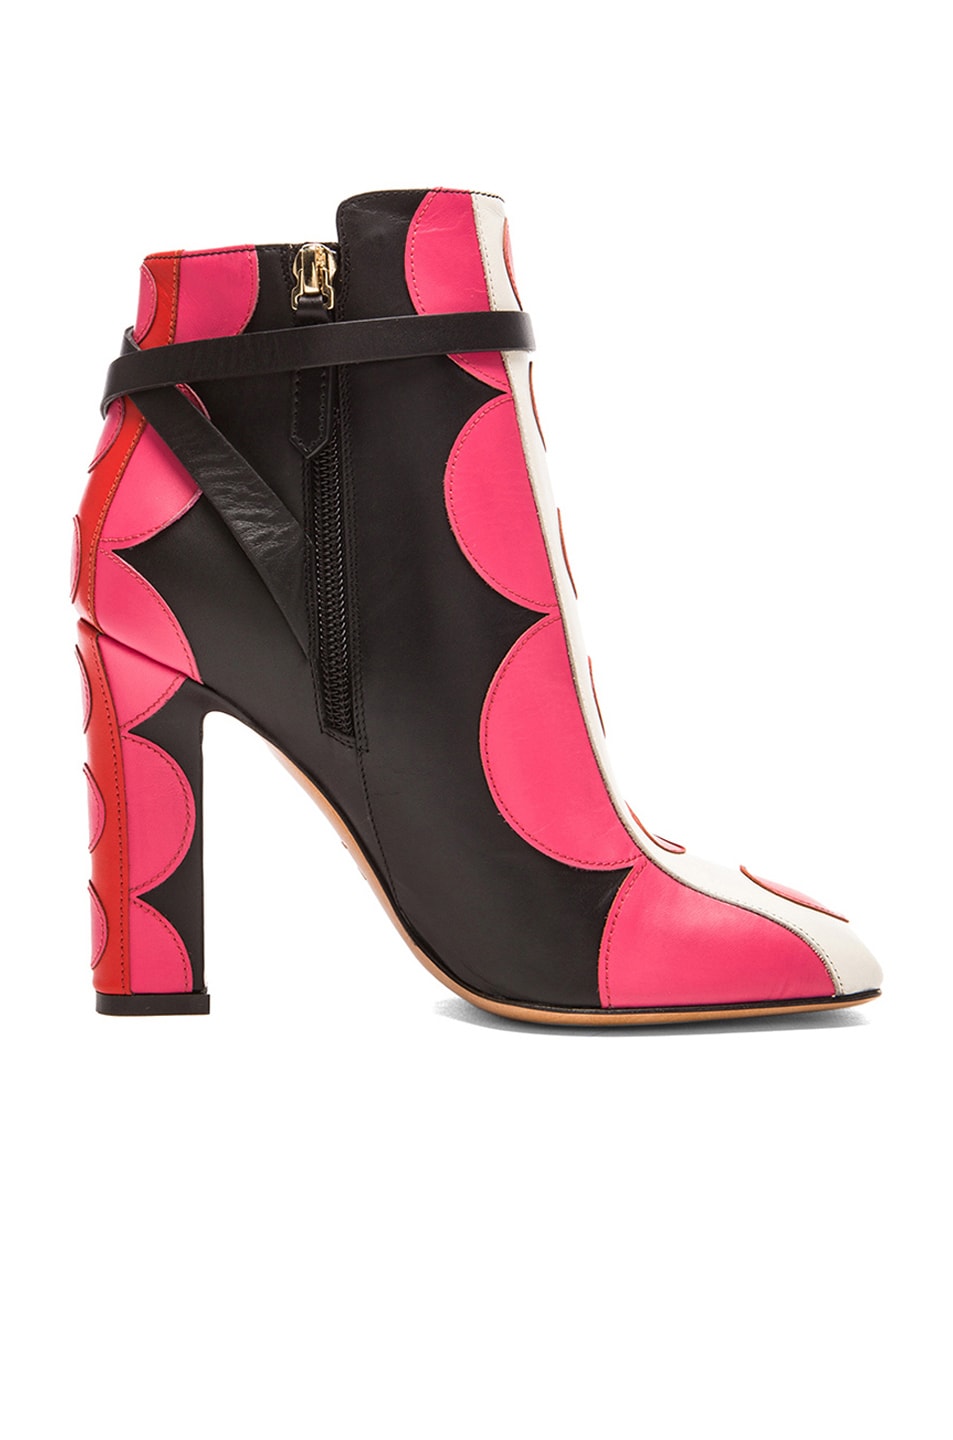 Valentino Garavani Carmen Leather Booties in Pink Multi | FWRD